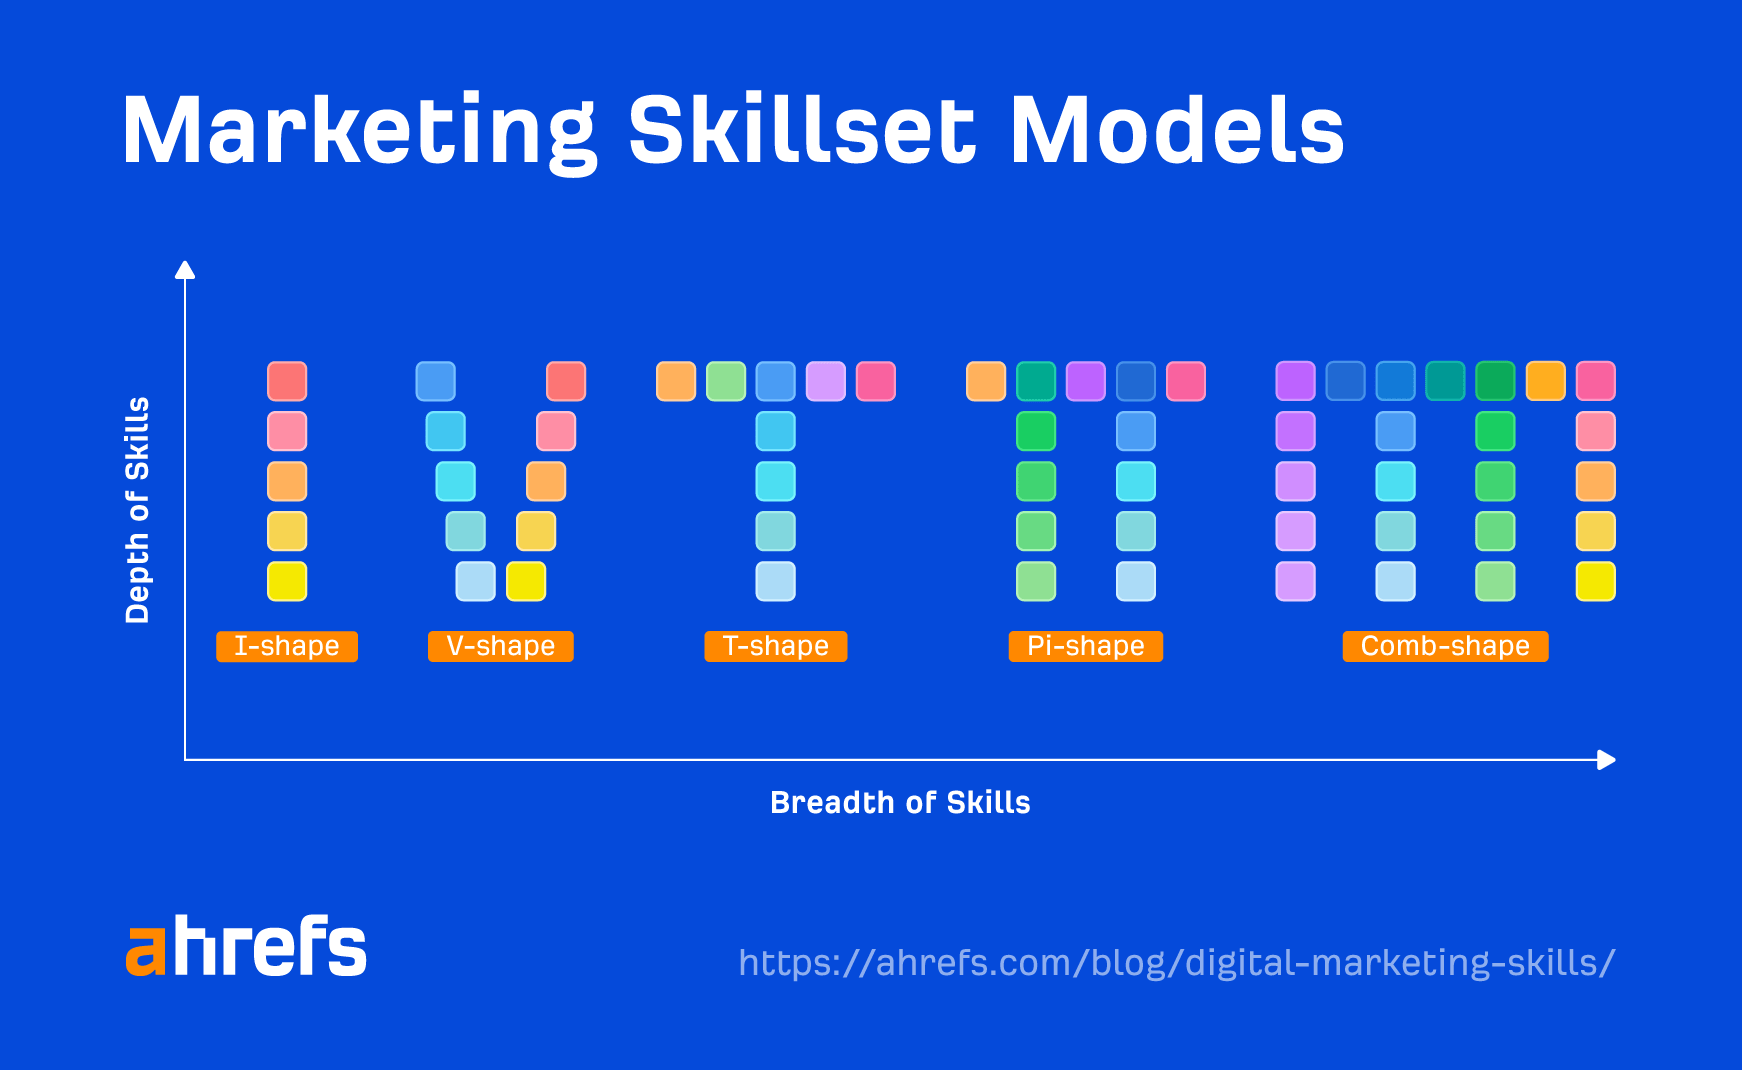 Marketing skillset models